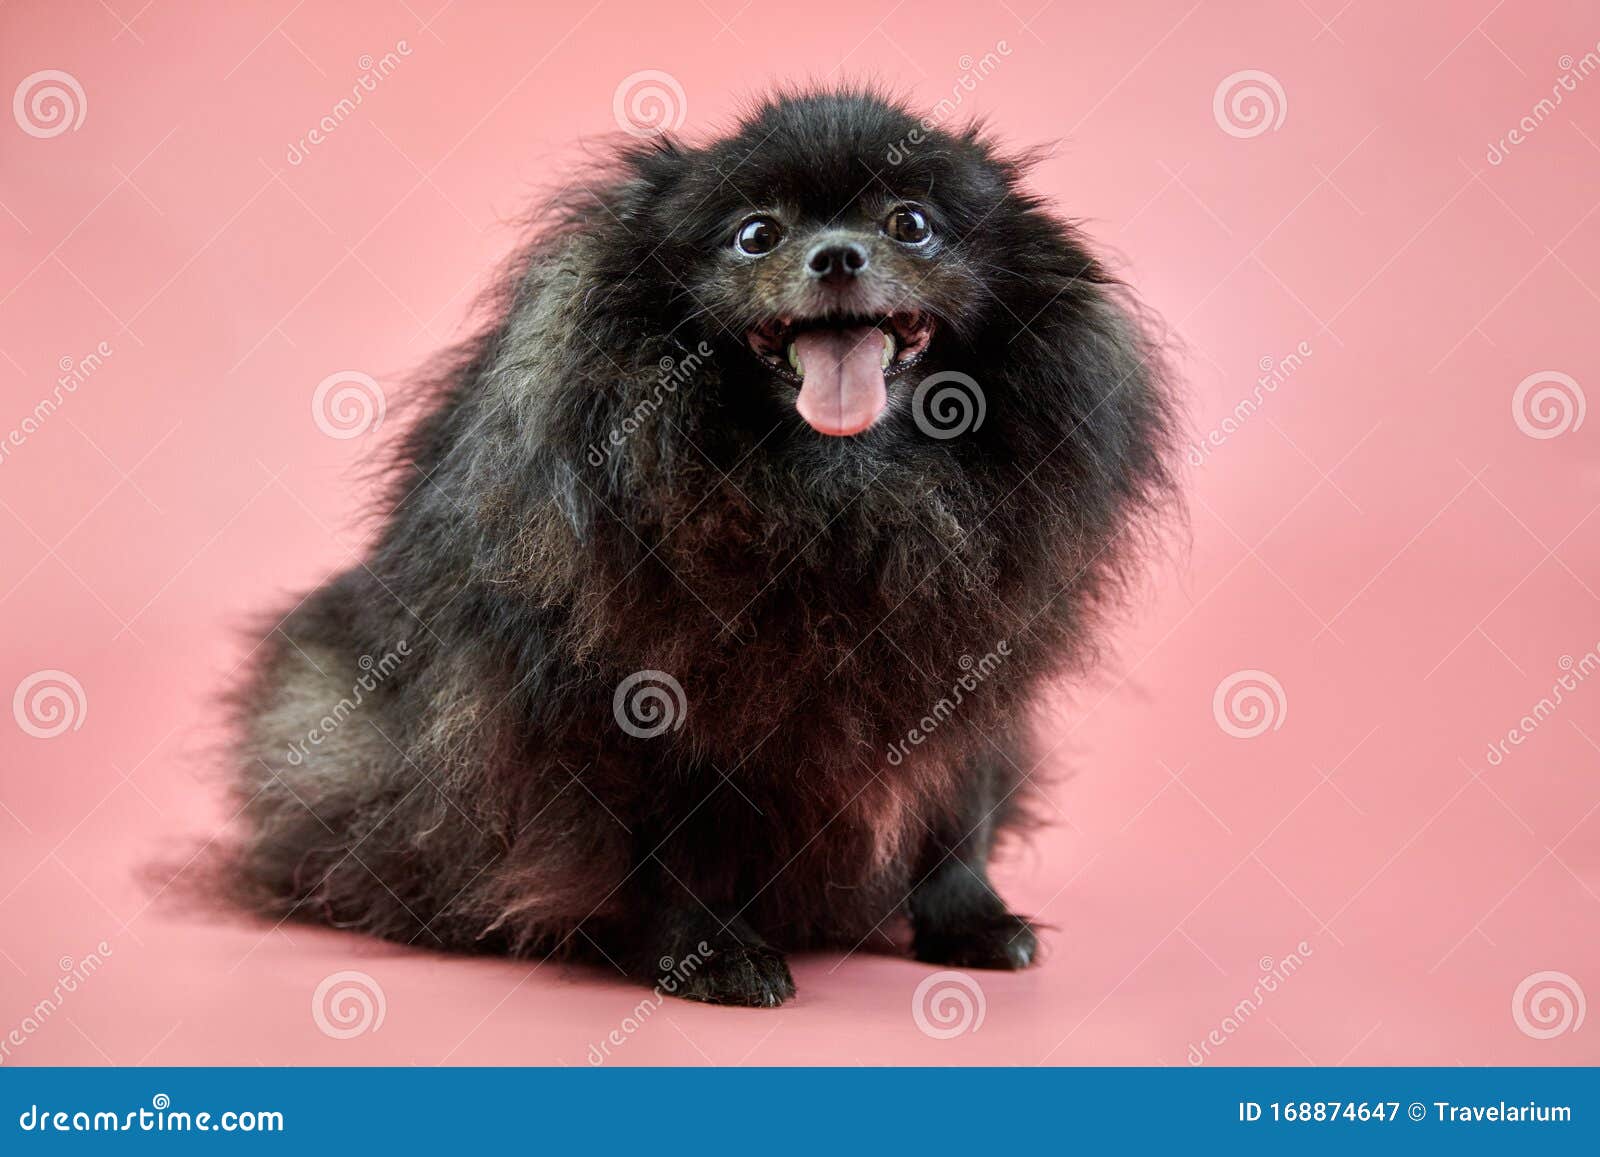 Pomeranian Spitz Black Puppy Image - Image breed, lovely: 168874647